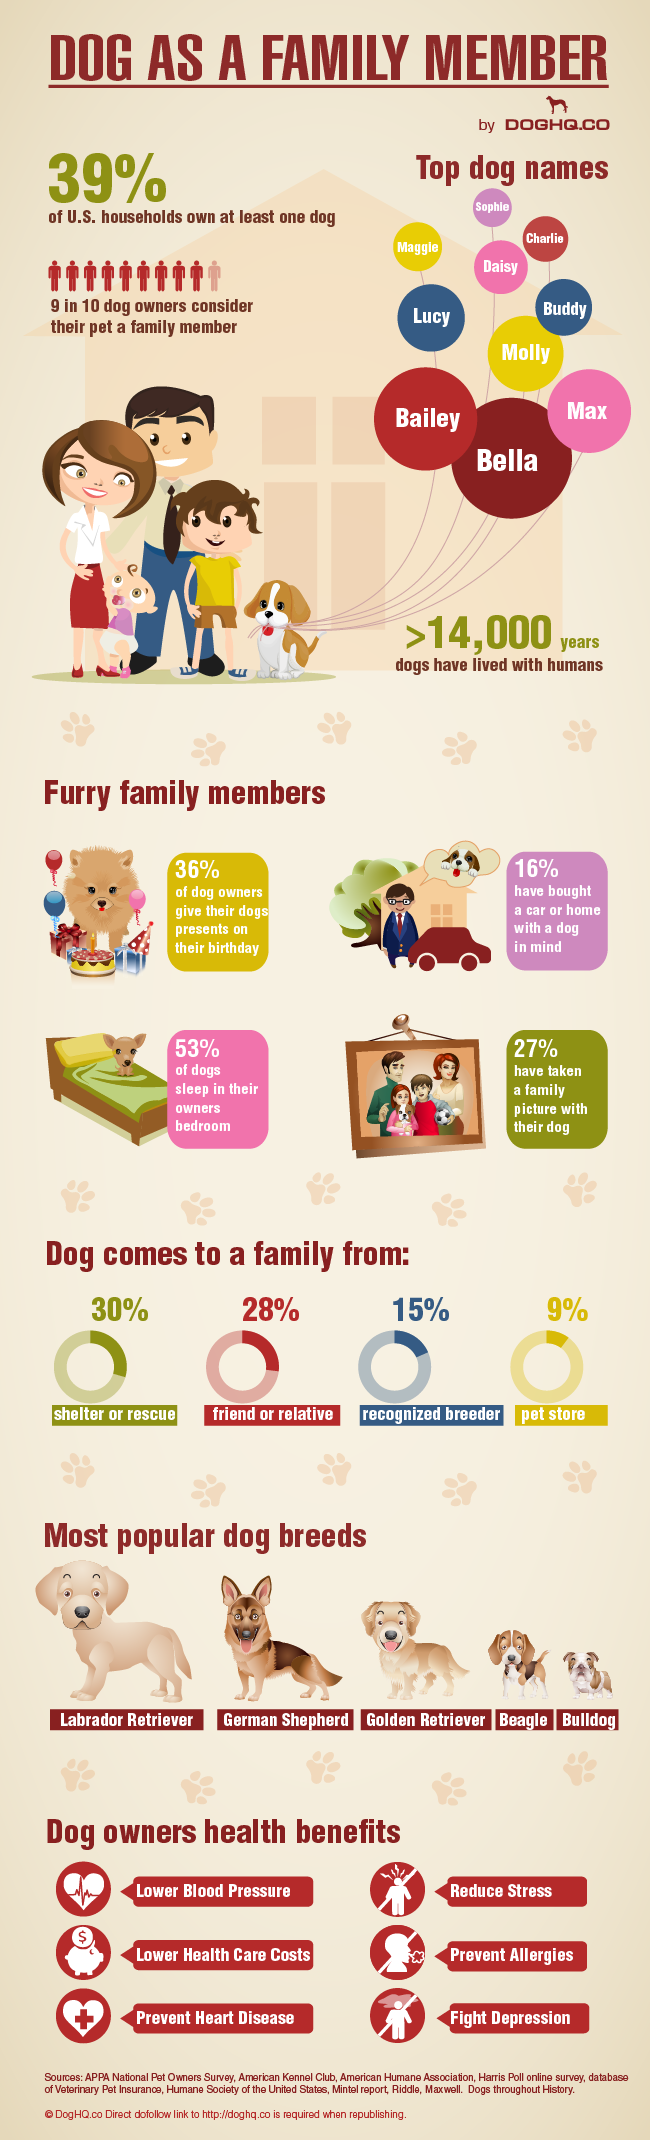 Dog as a family member